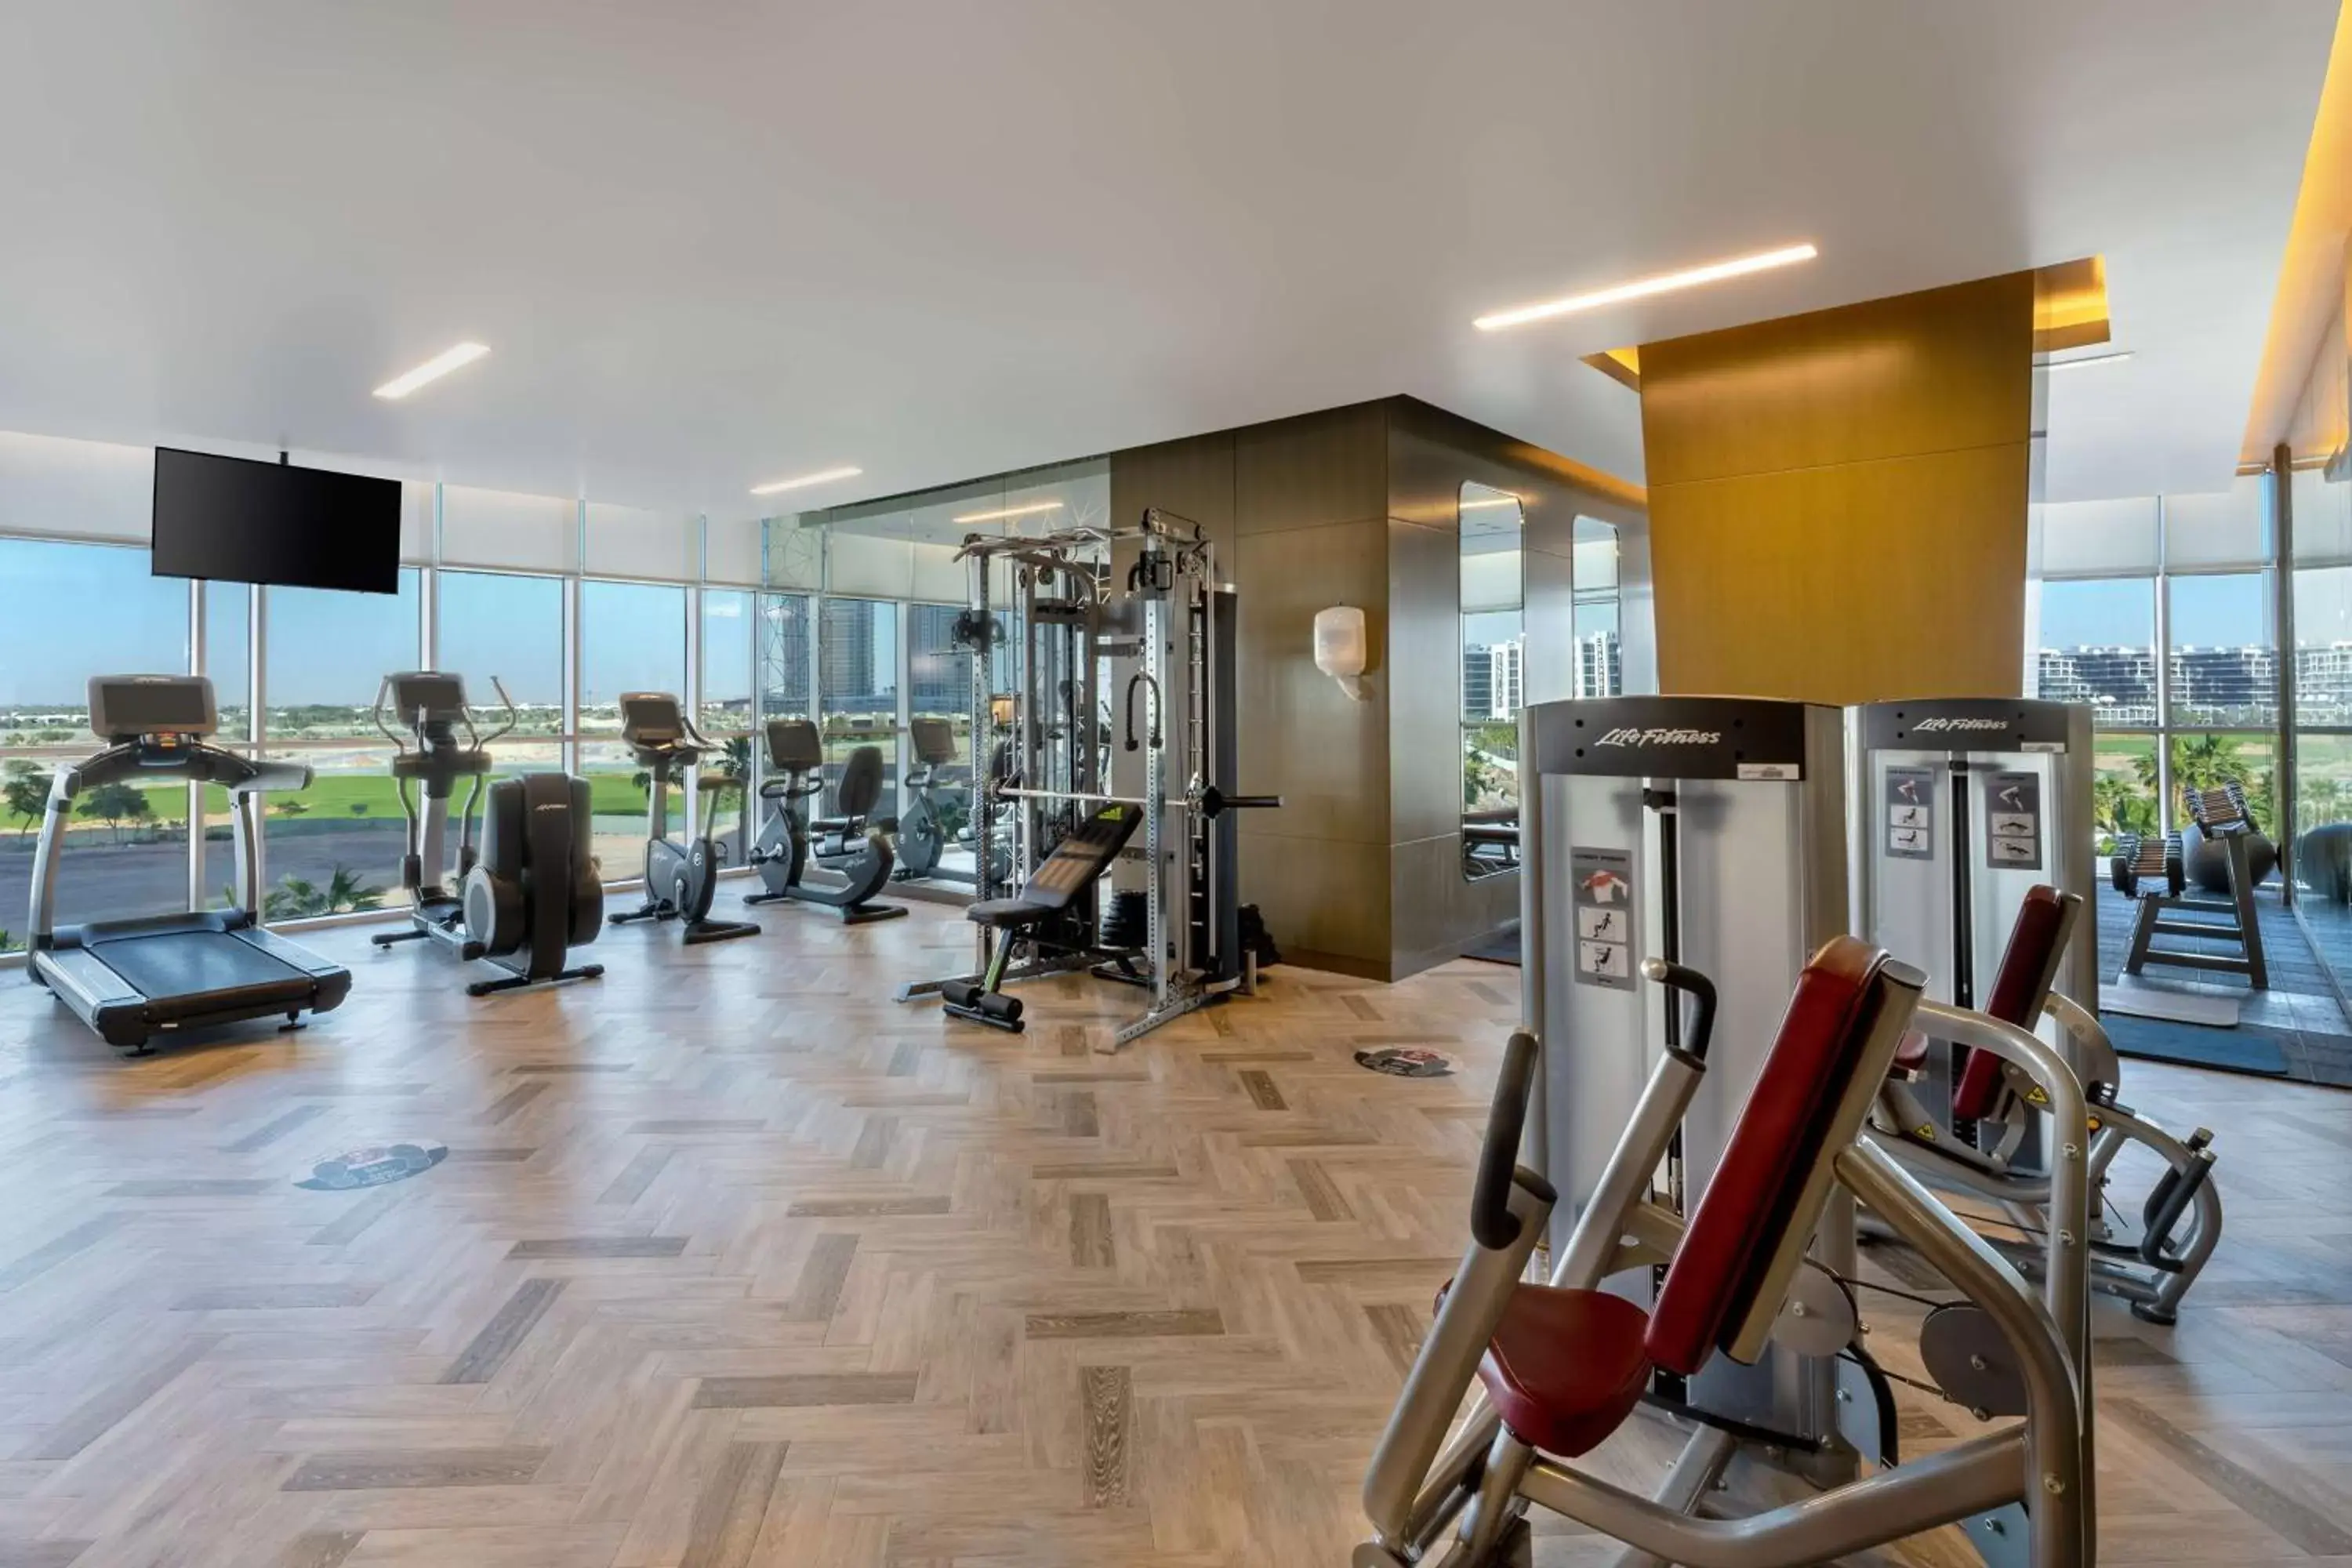 Fitness centre/facilities, Fitness Center/Facilities in Radisson Dubai Damac Hills